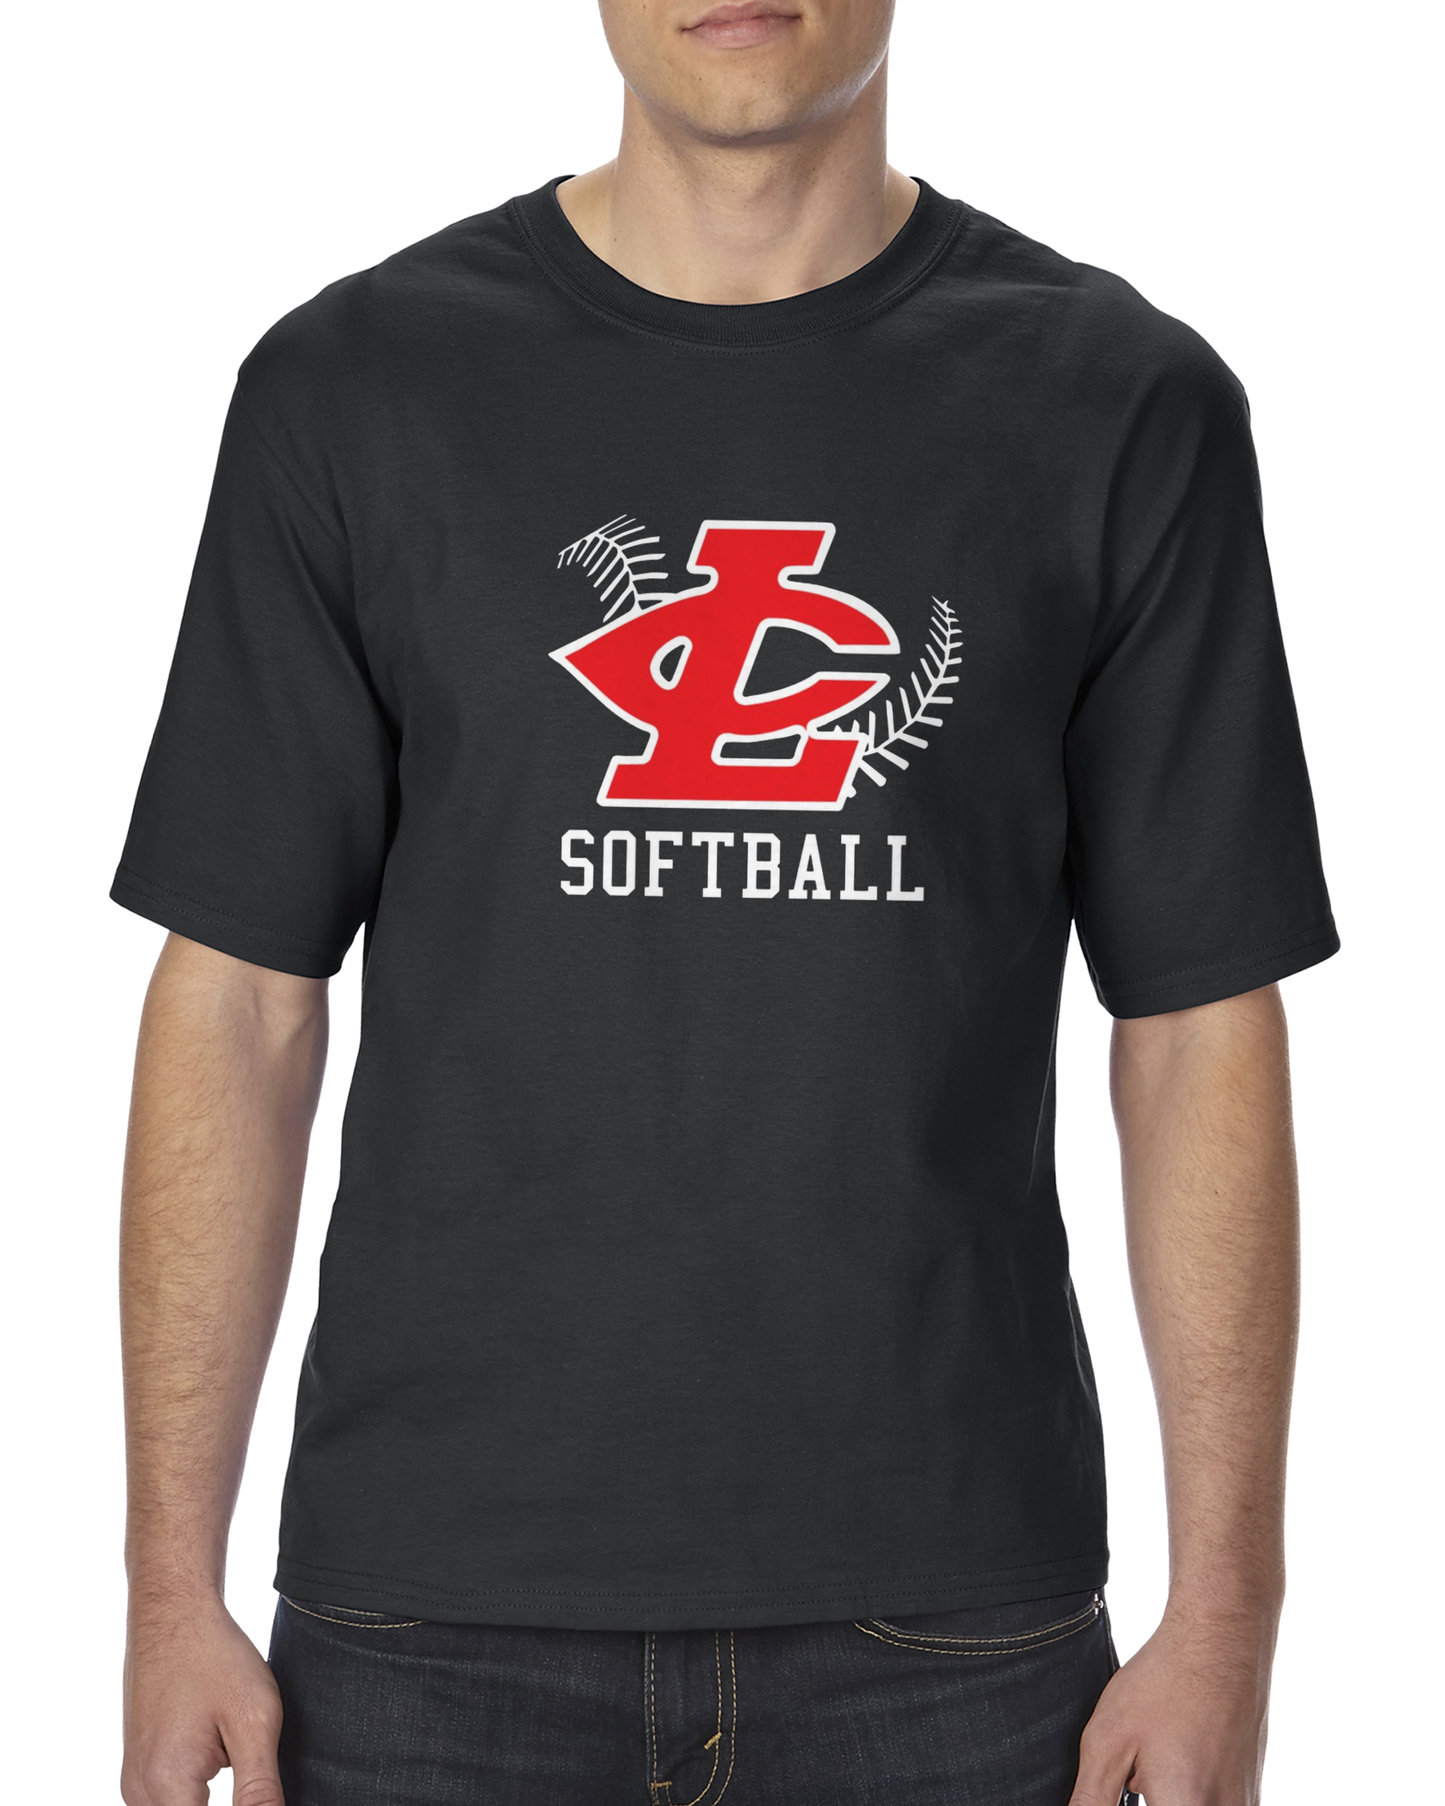 CLLL softball unisex Tshirt TALL SIZES Gildan Ultra Cotton BLACK